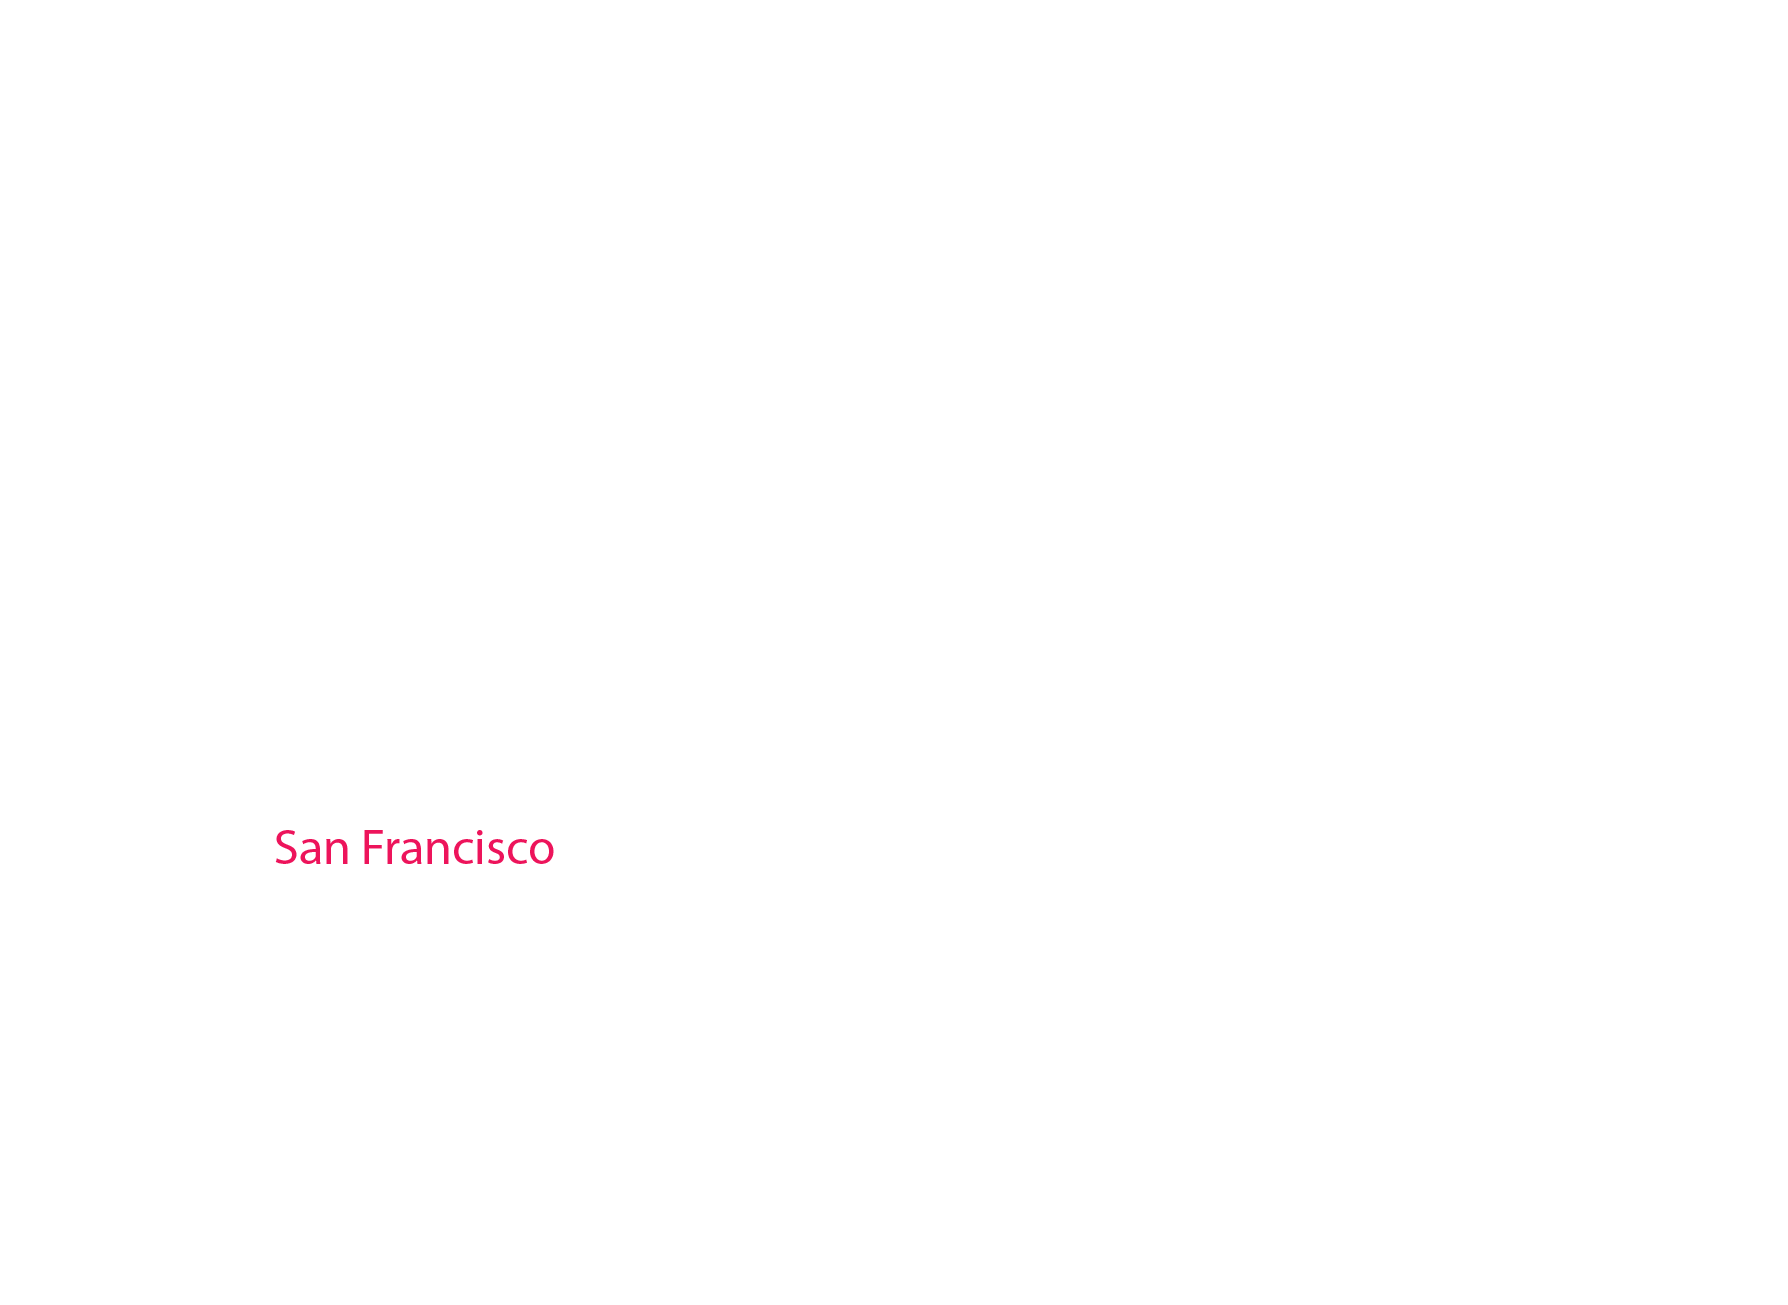 San-Francisco label